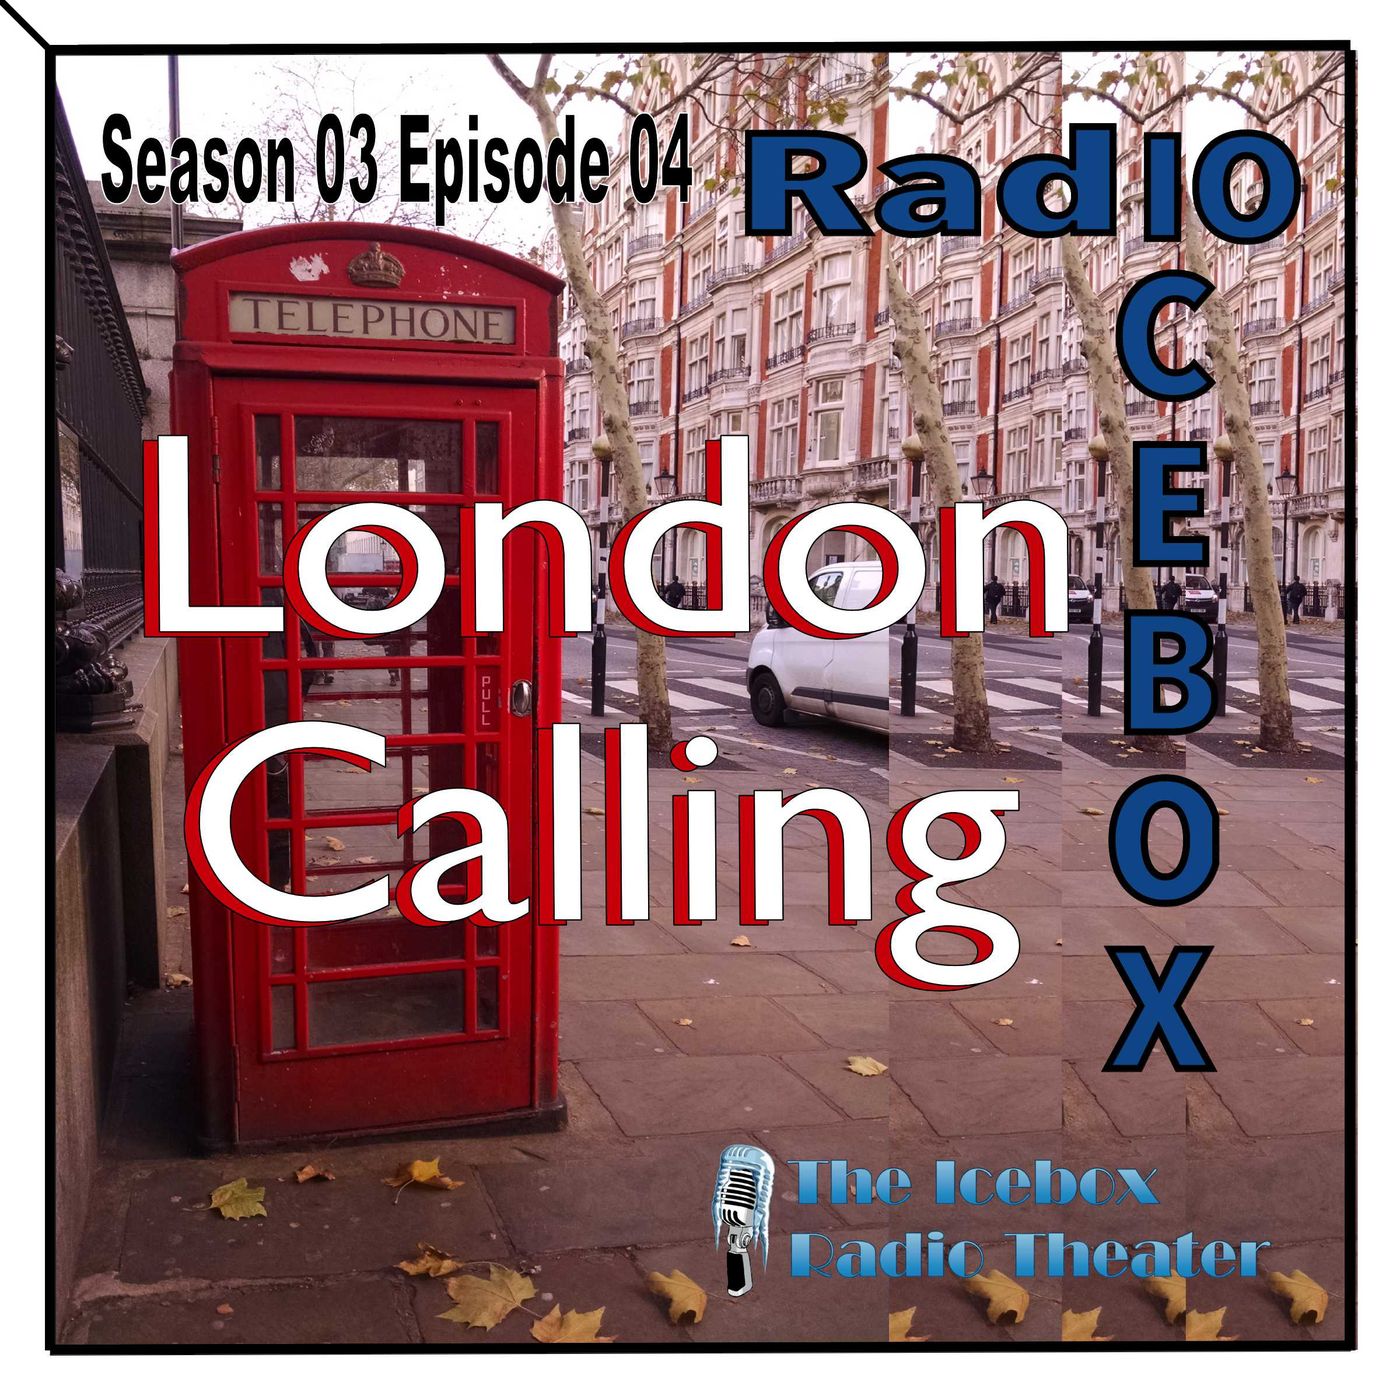 "Radio Icebox" Podcast